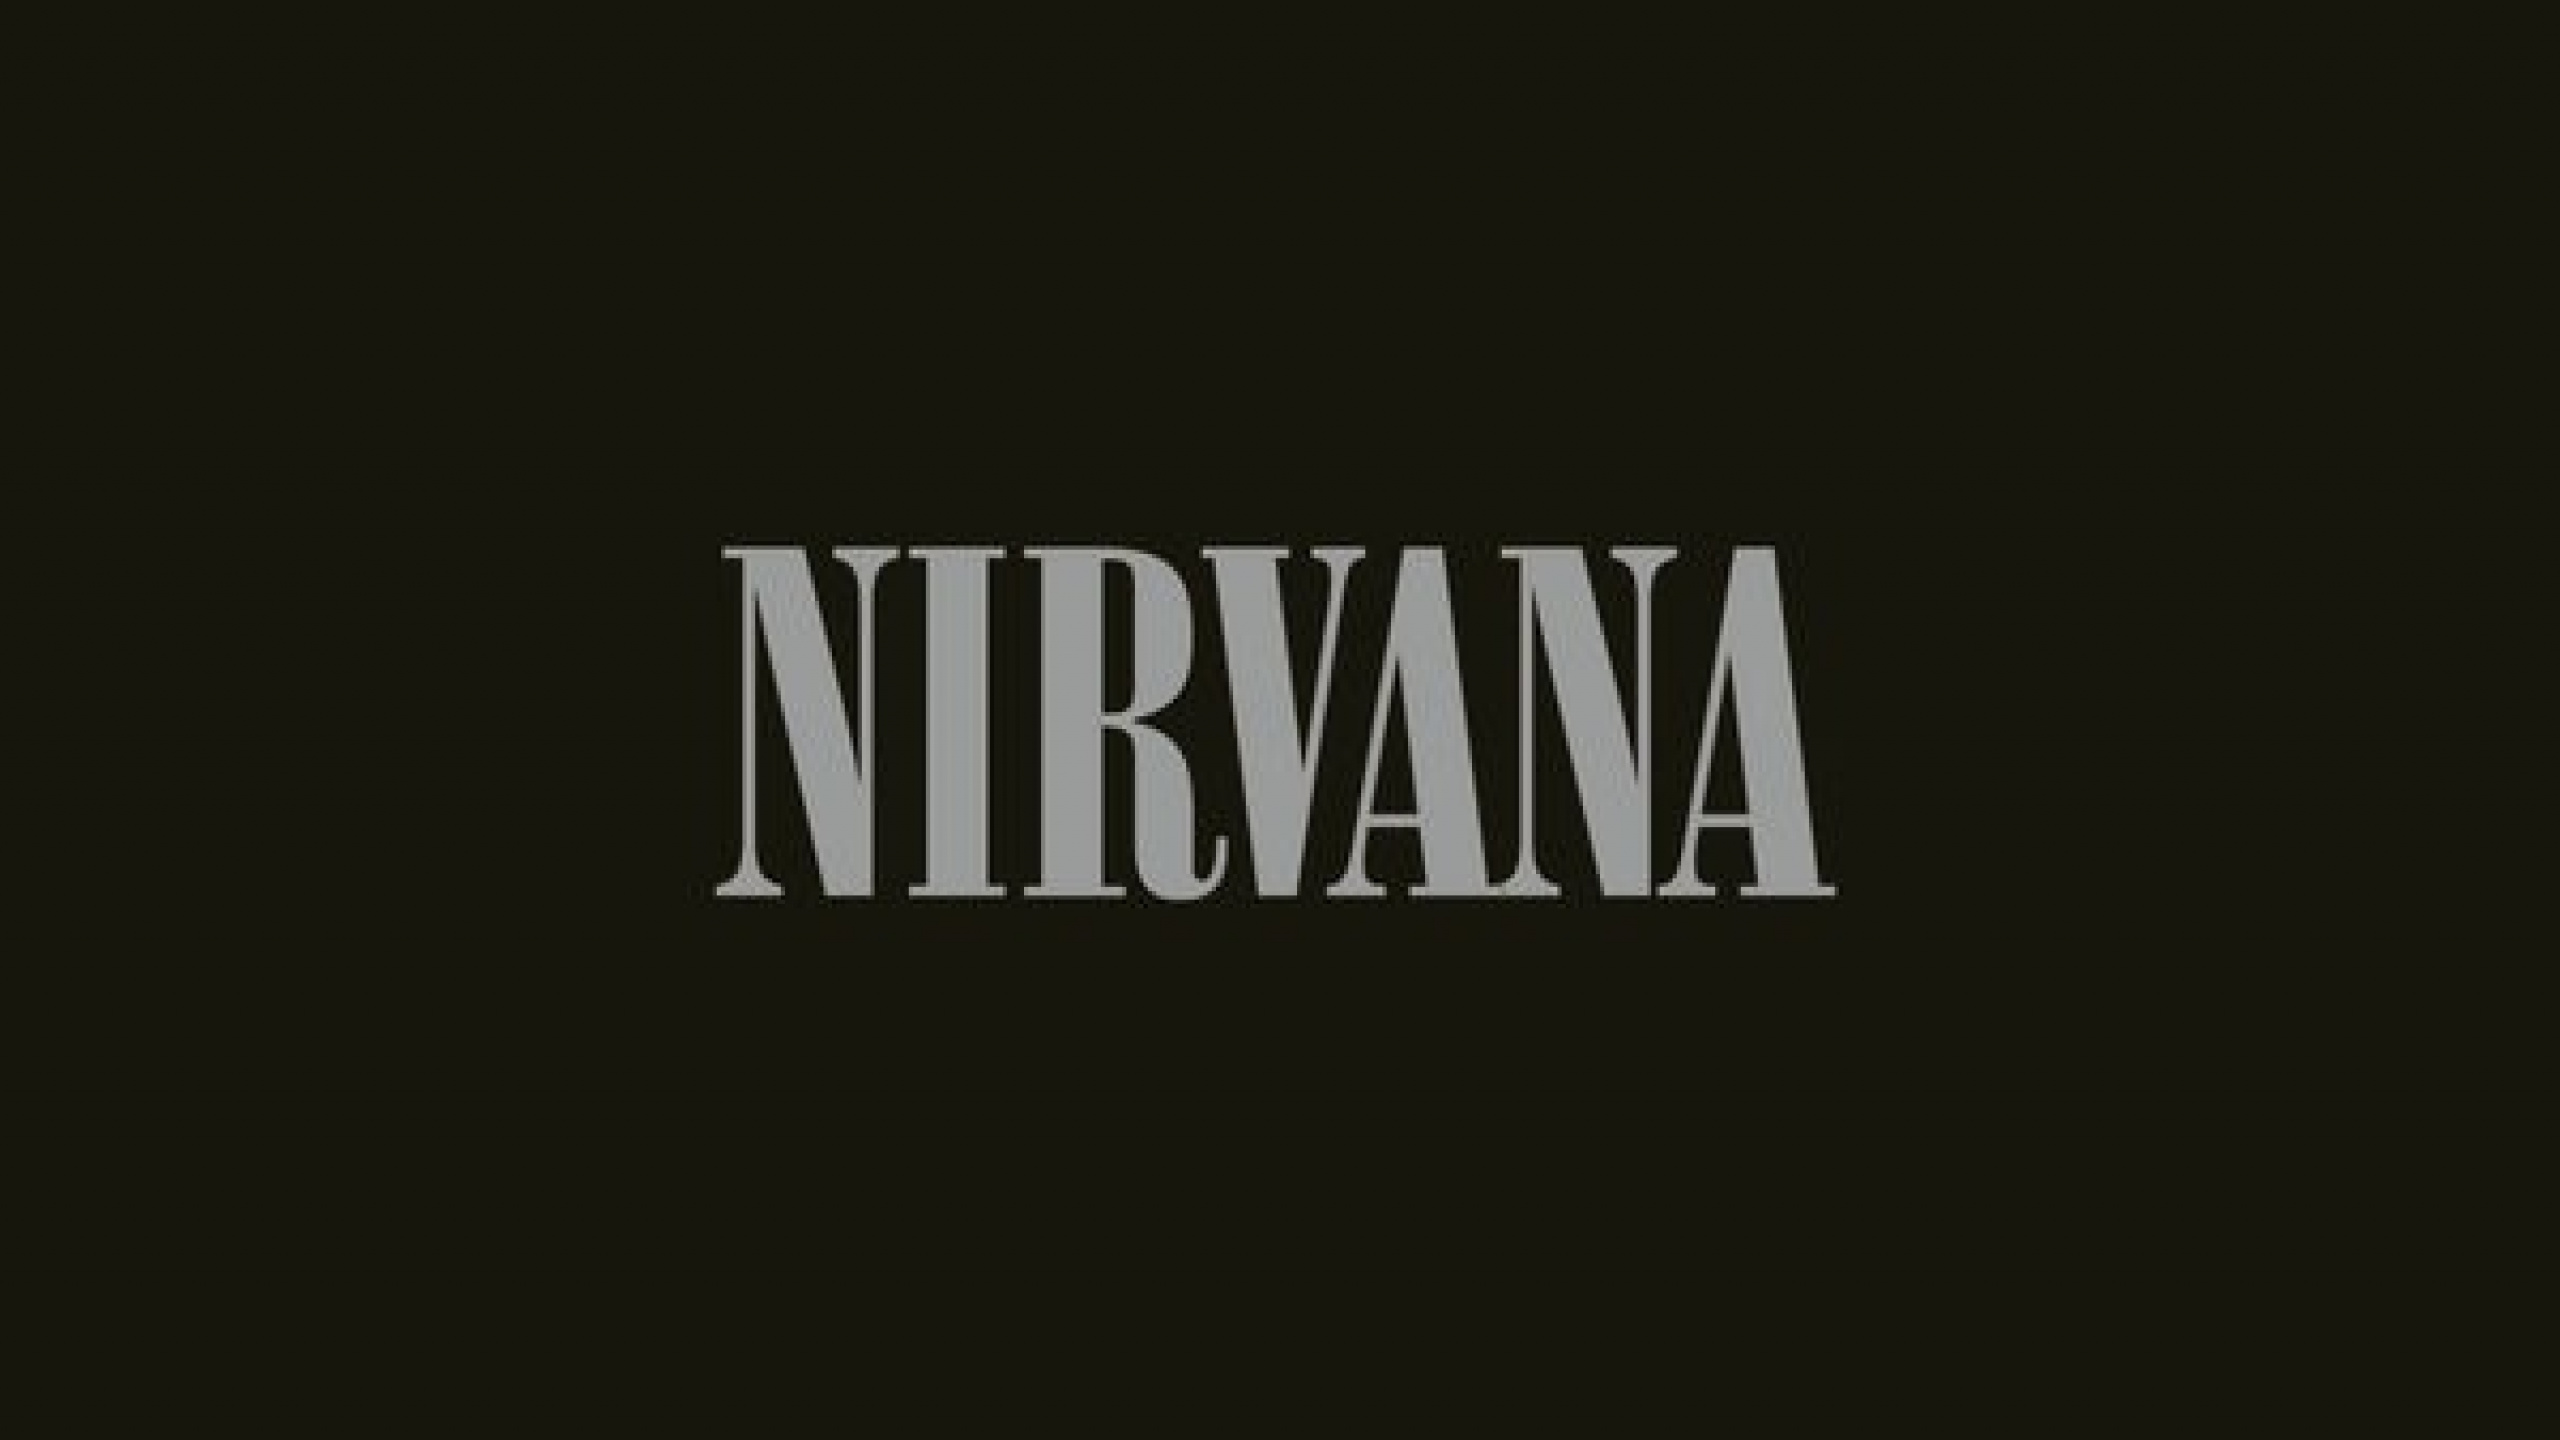 Nirvana, Album, Graphisme, Texte, Noir. Wallpaper in 2560x1440 Resolution